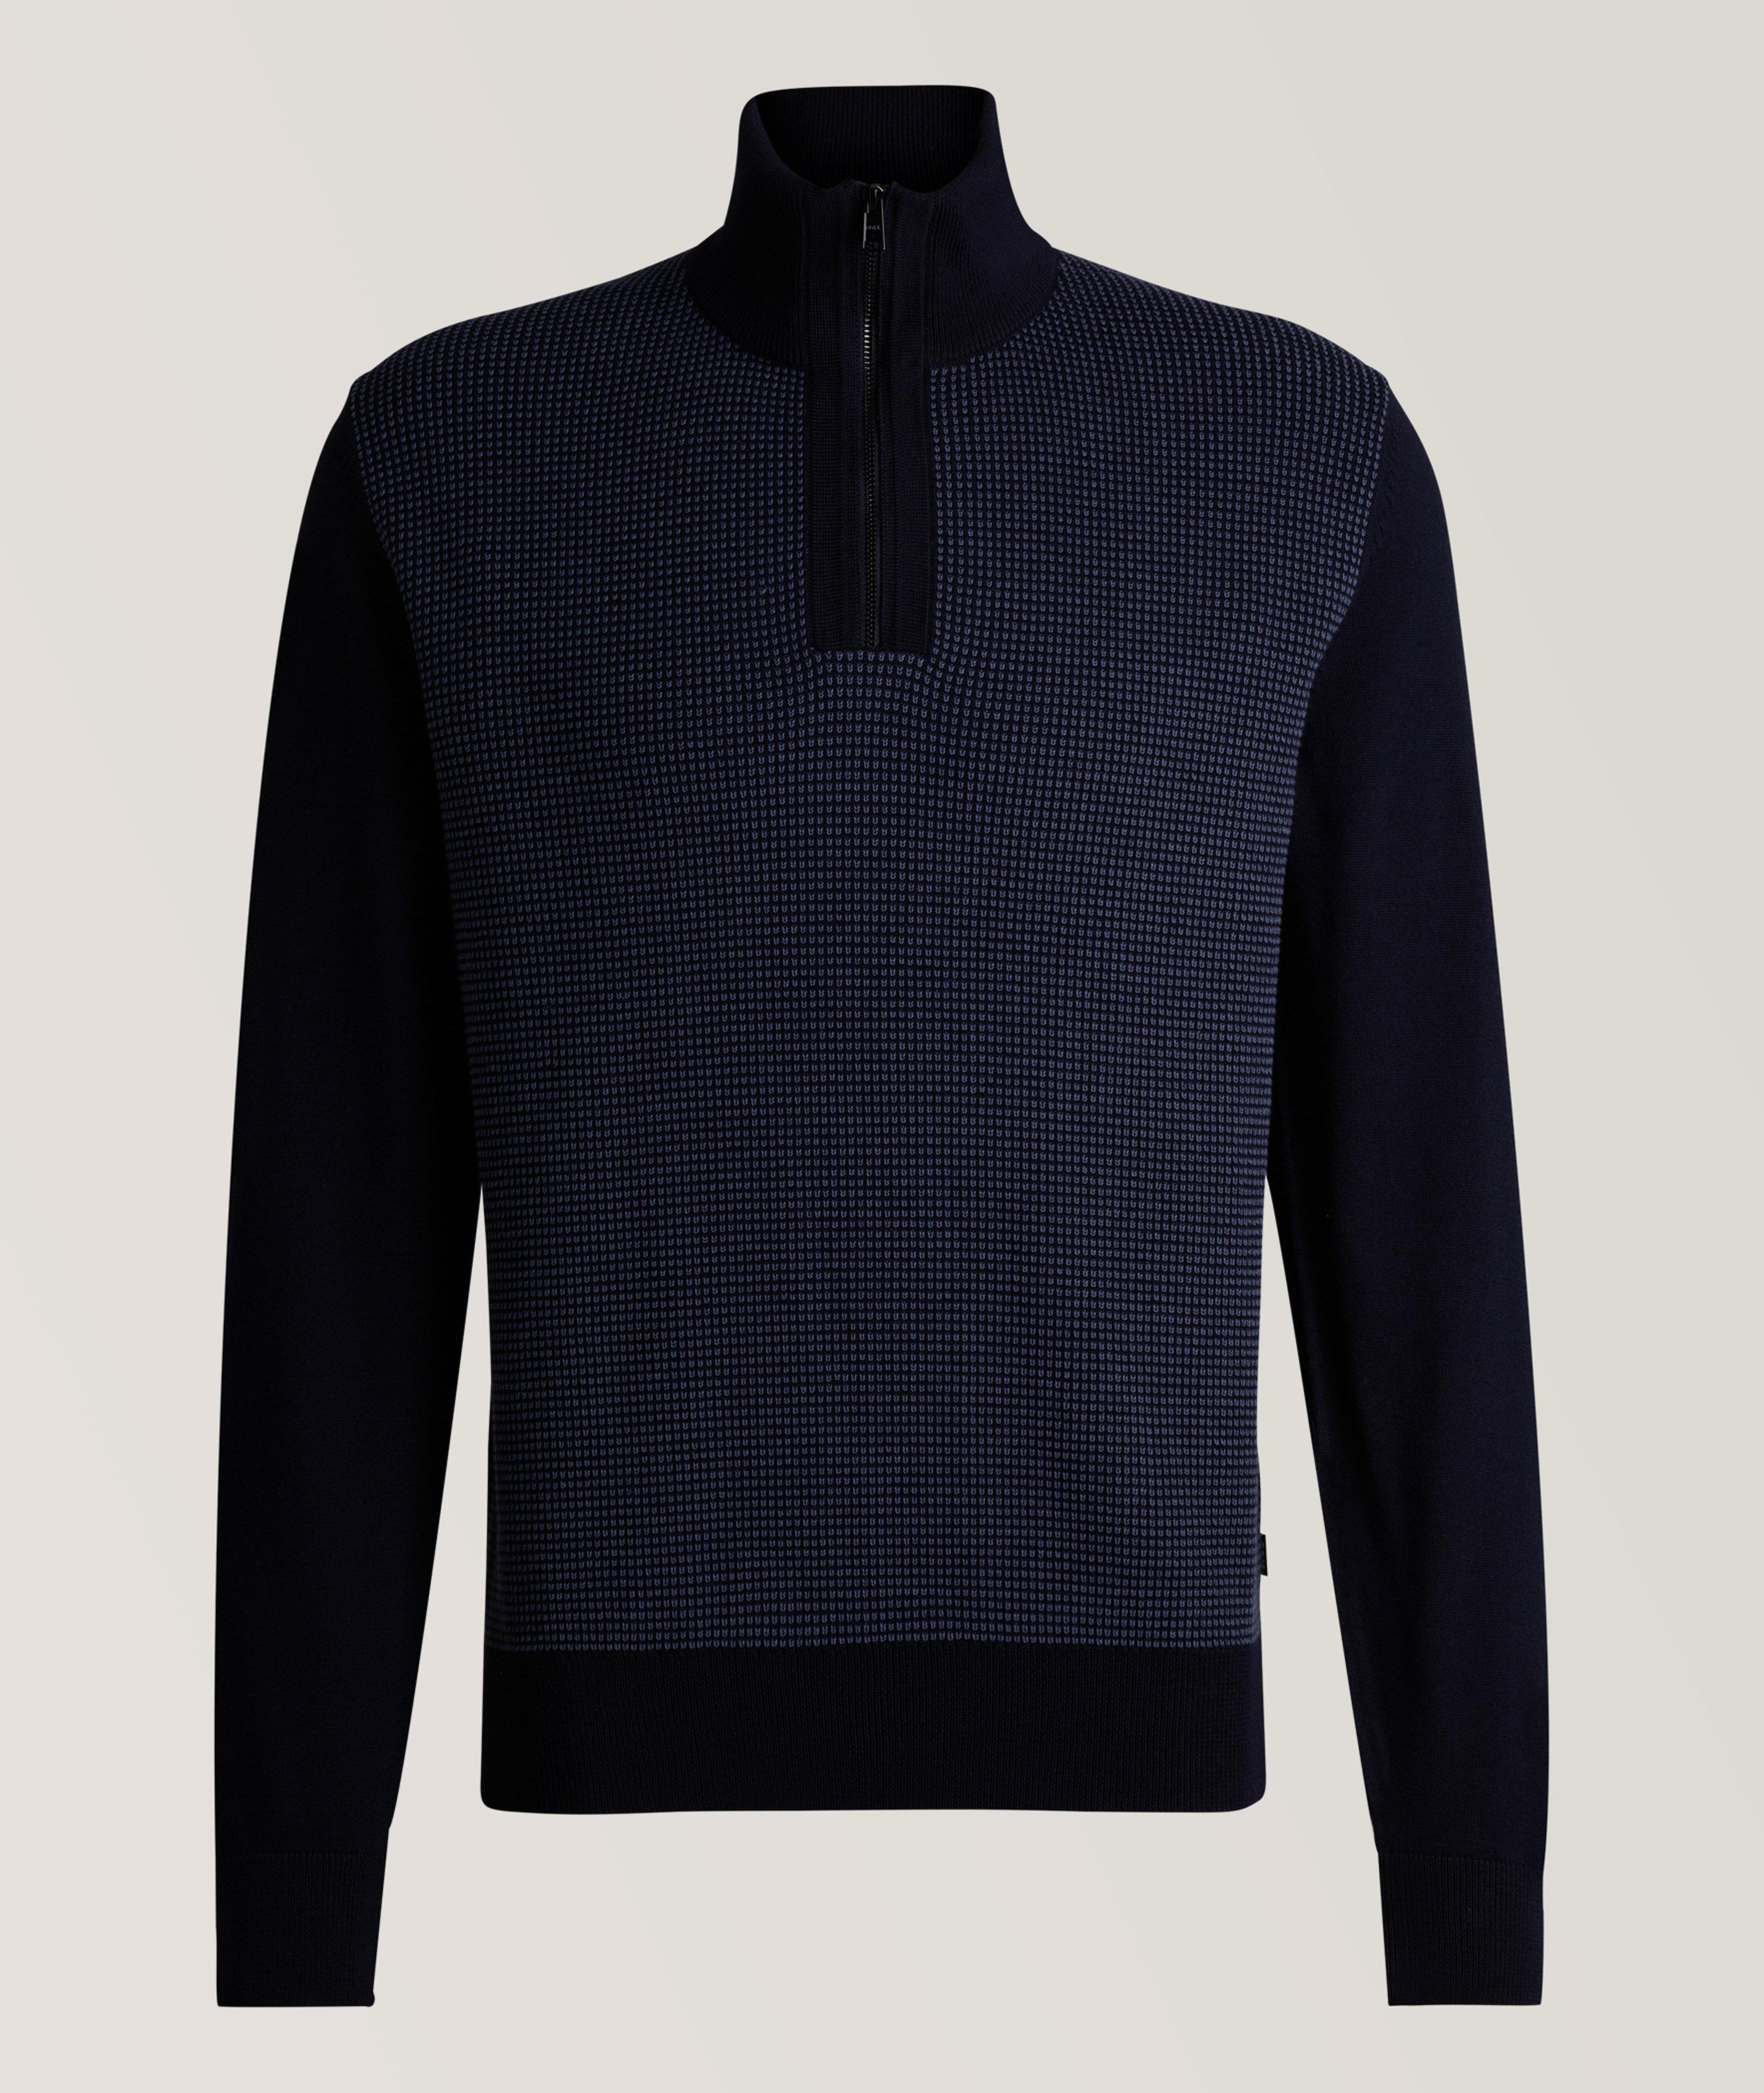 BLACK HERITAGE Collection Virgin Wool Quarter-Zip Sweater image 0